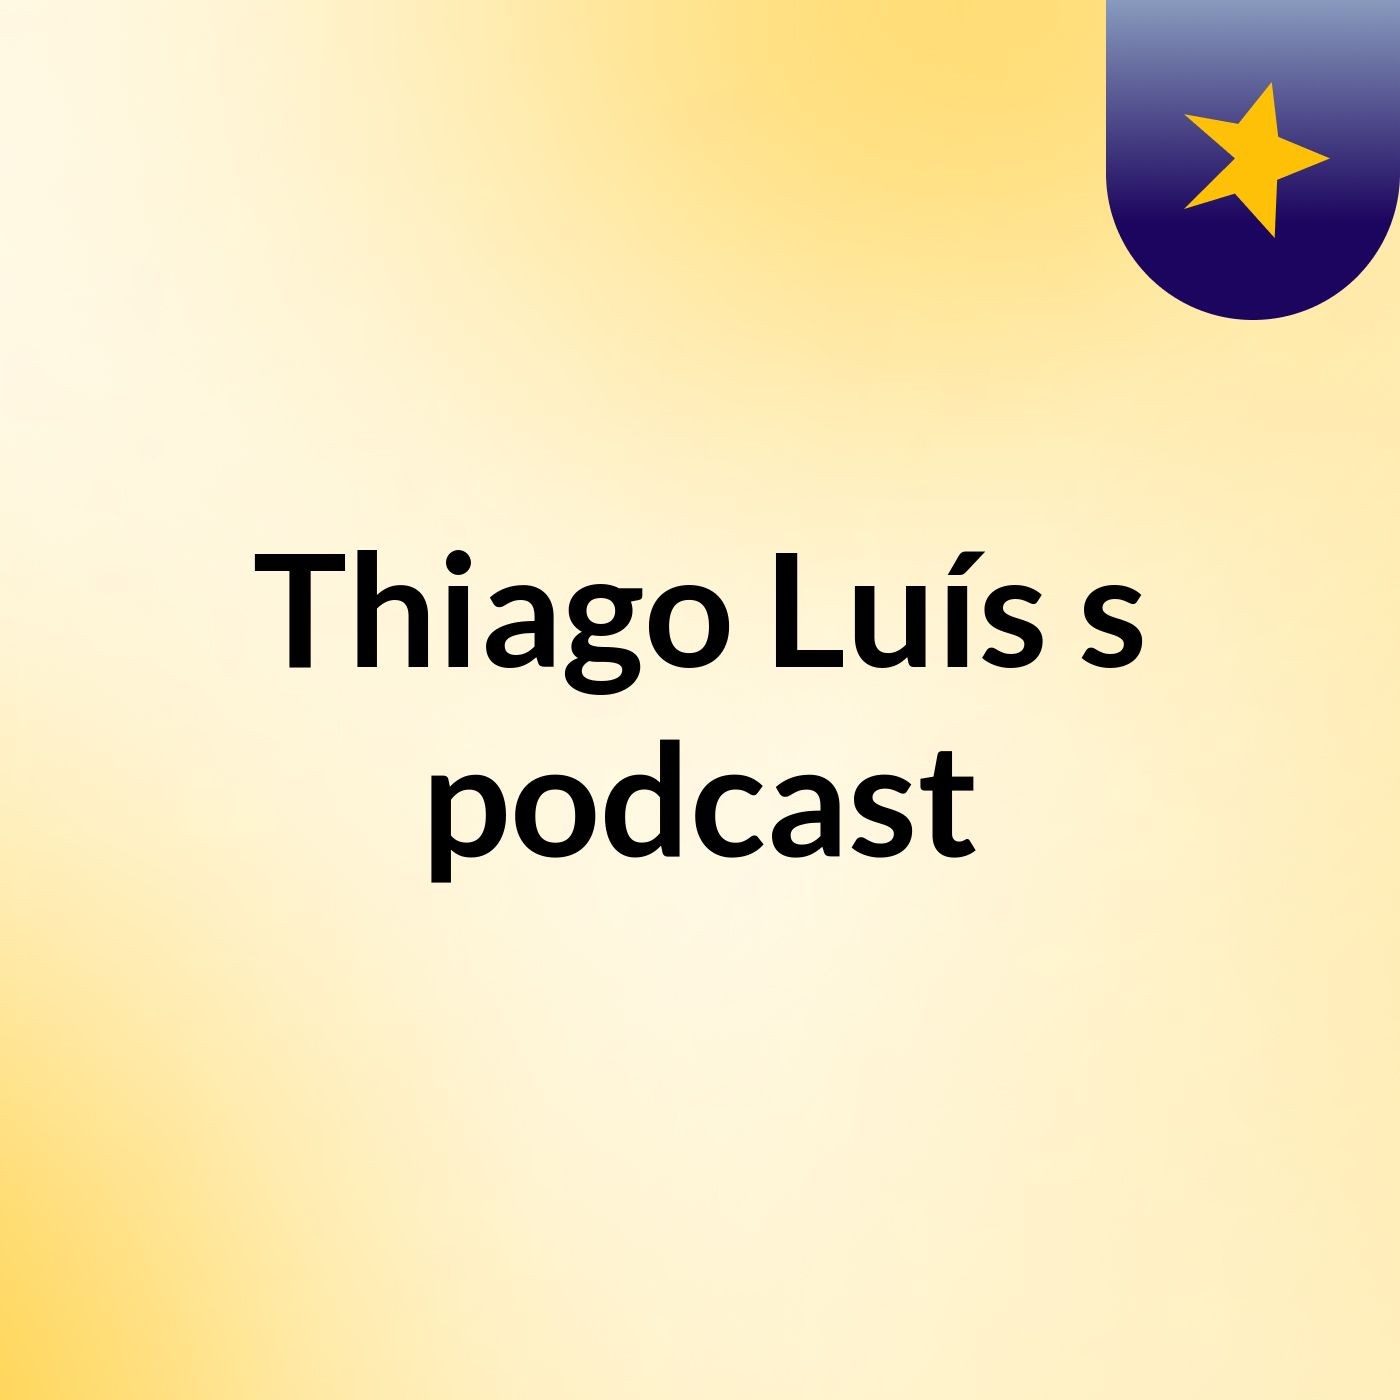 Thiago Luís's podcast